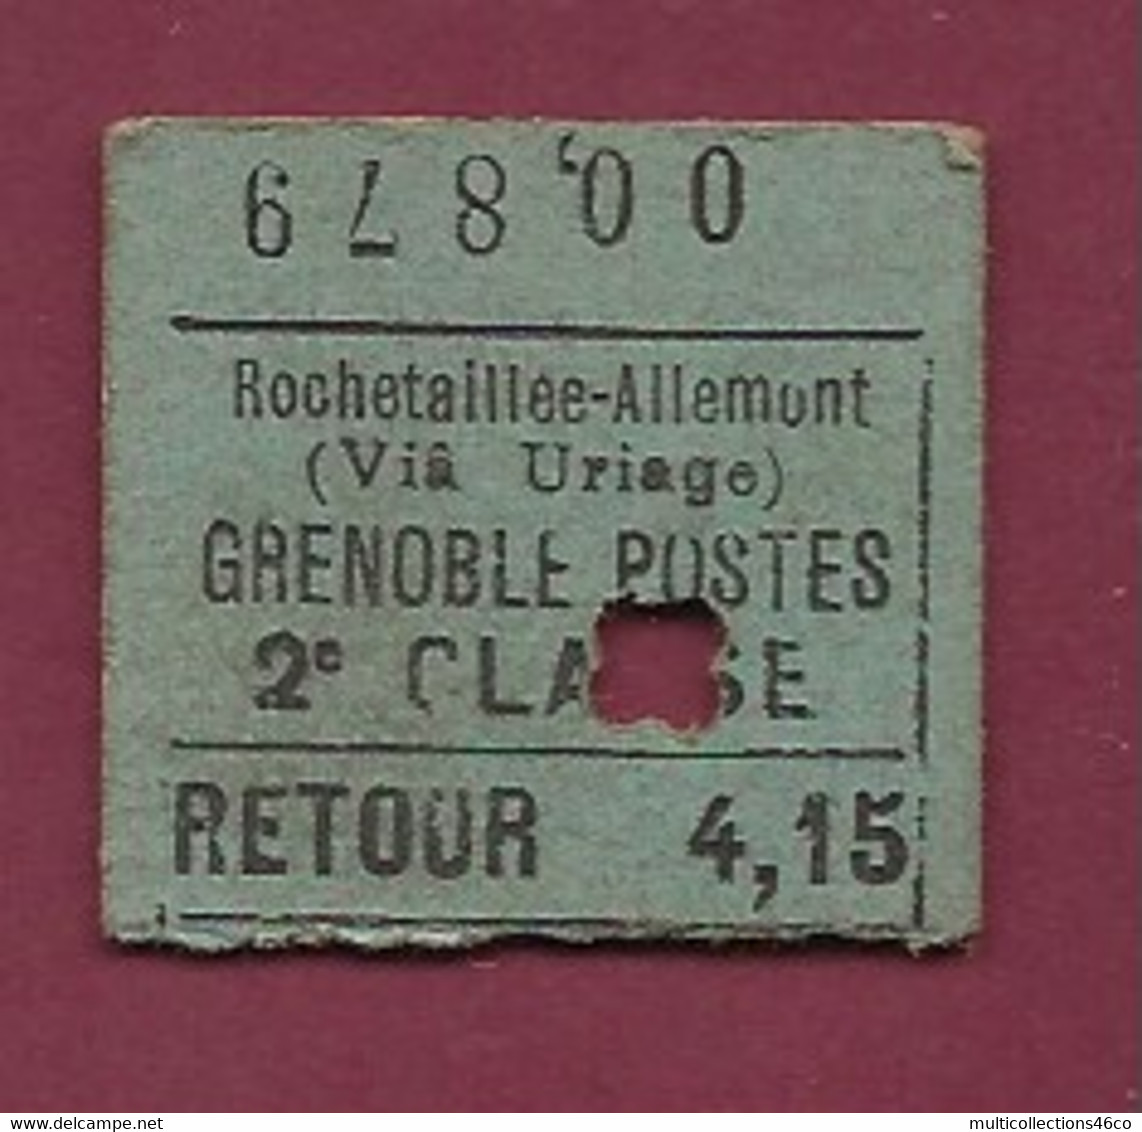 061220A - TICKET CHEMIN DE FER TRAMWAY - FRANCE Rochetaillee Allemont Via Uriage GRENOBLE POSTES Retour 4,15 00879 - Europe